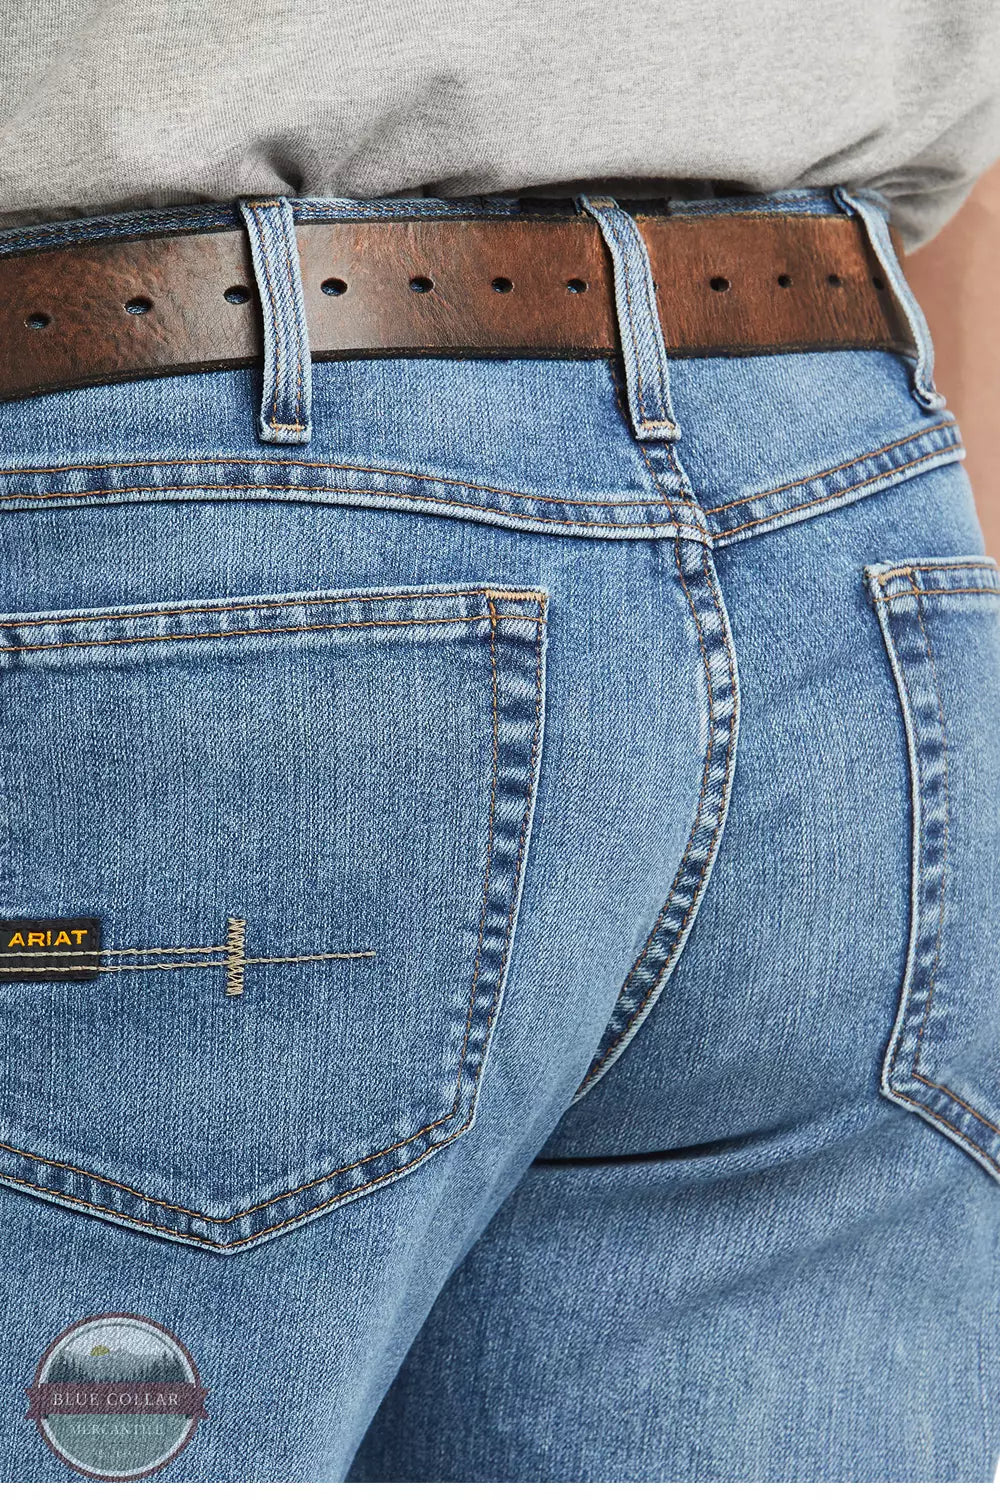 Ariat 10021854 Rebar M4 Low Rise DuraStretch Basic Boot Cut Jean in Blue Haze Back Detail View